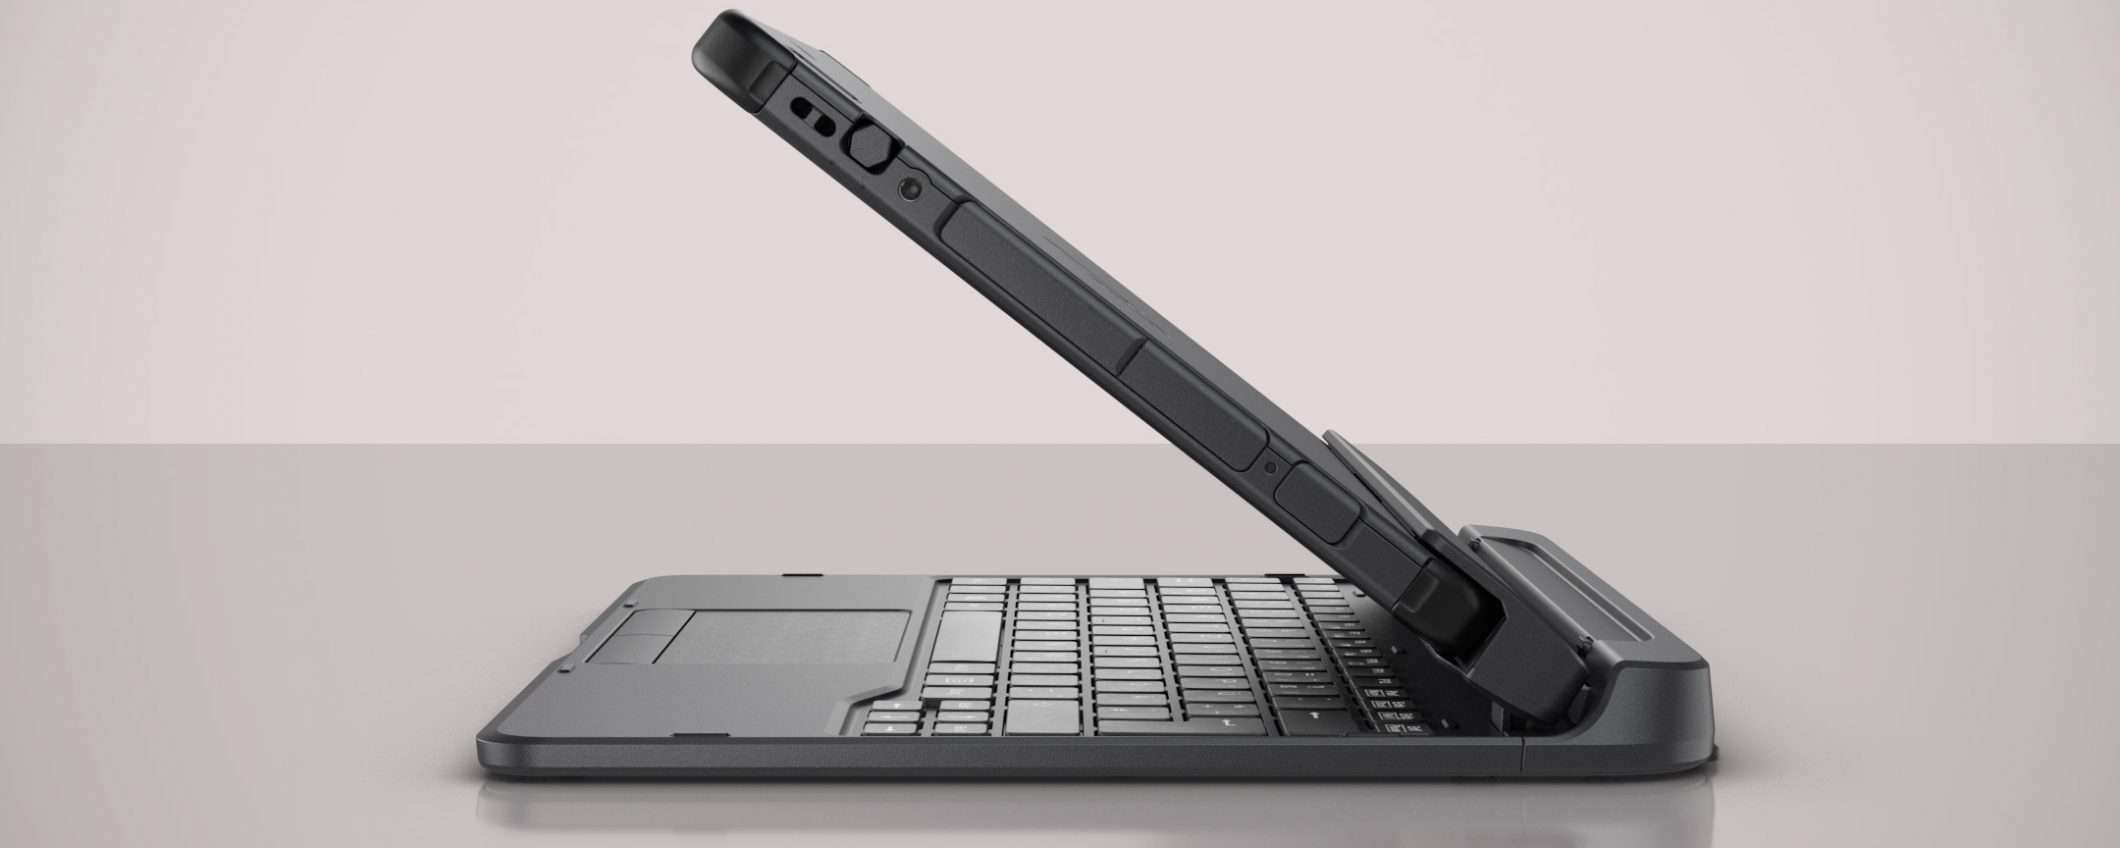 Fujitsu Stylistic Q5010, tablet rugged per lavoro